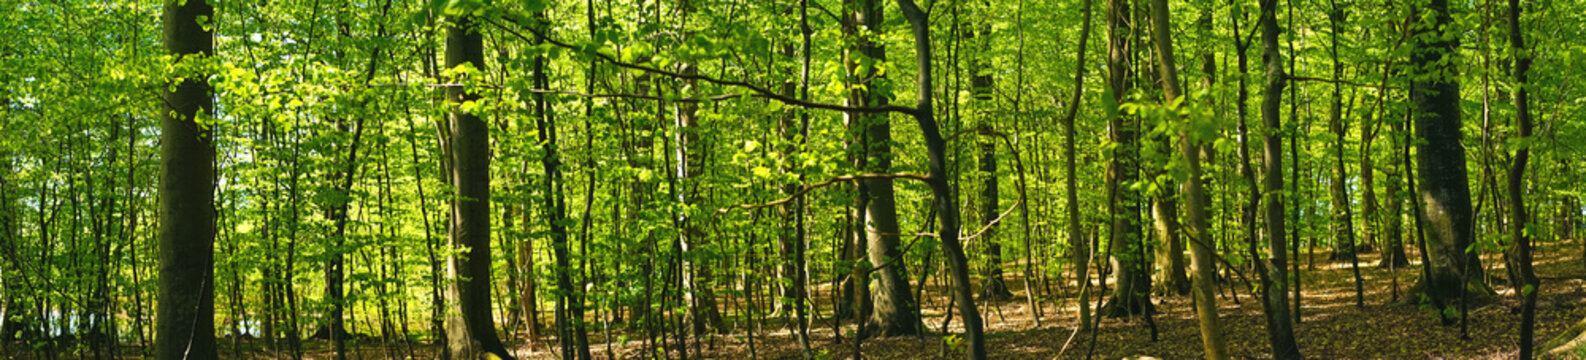 Fototapeta Beech forest scenery in panorama